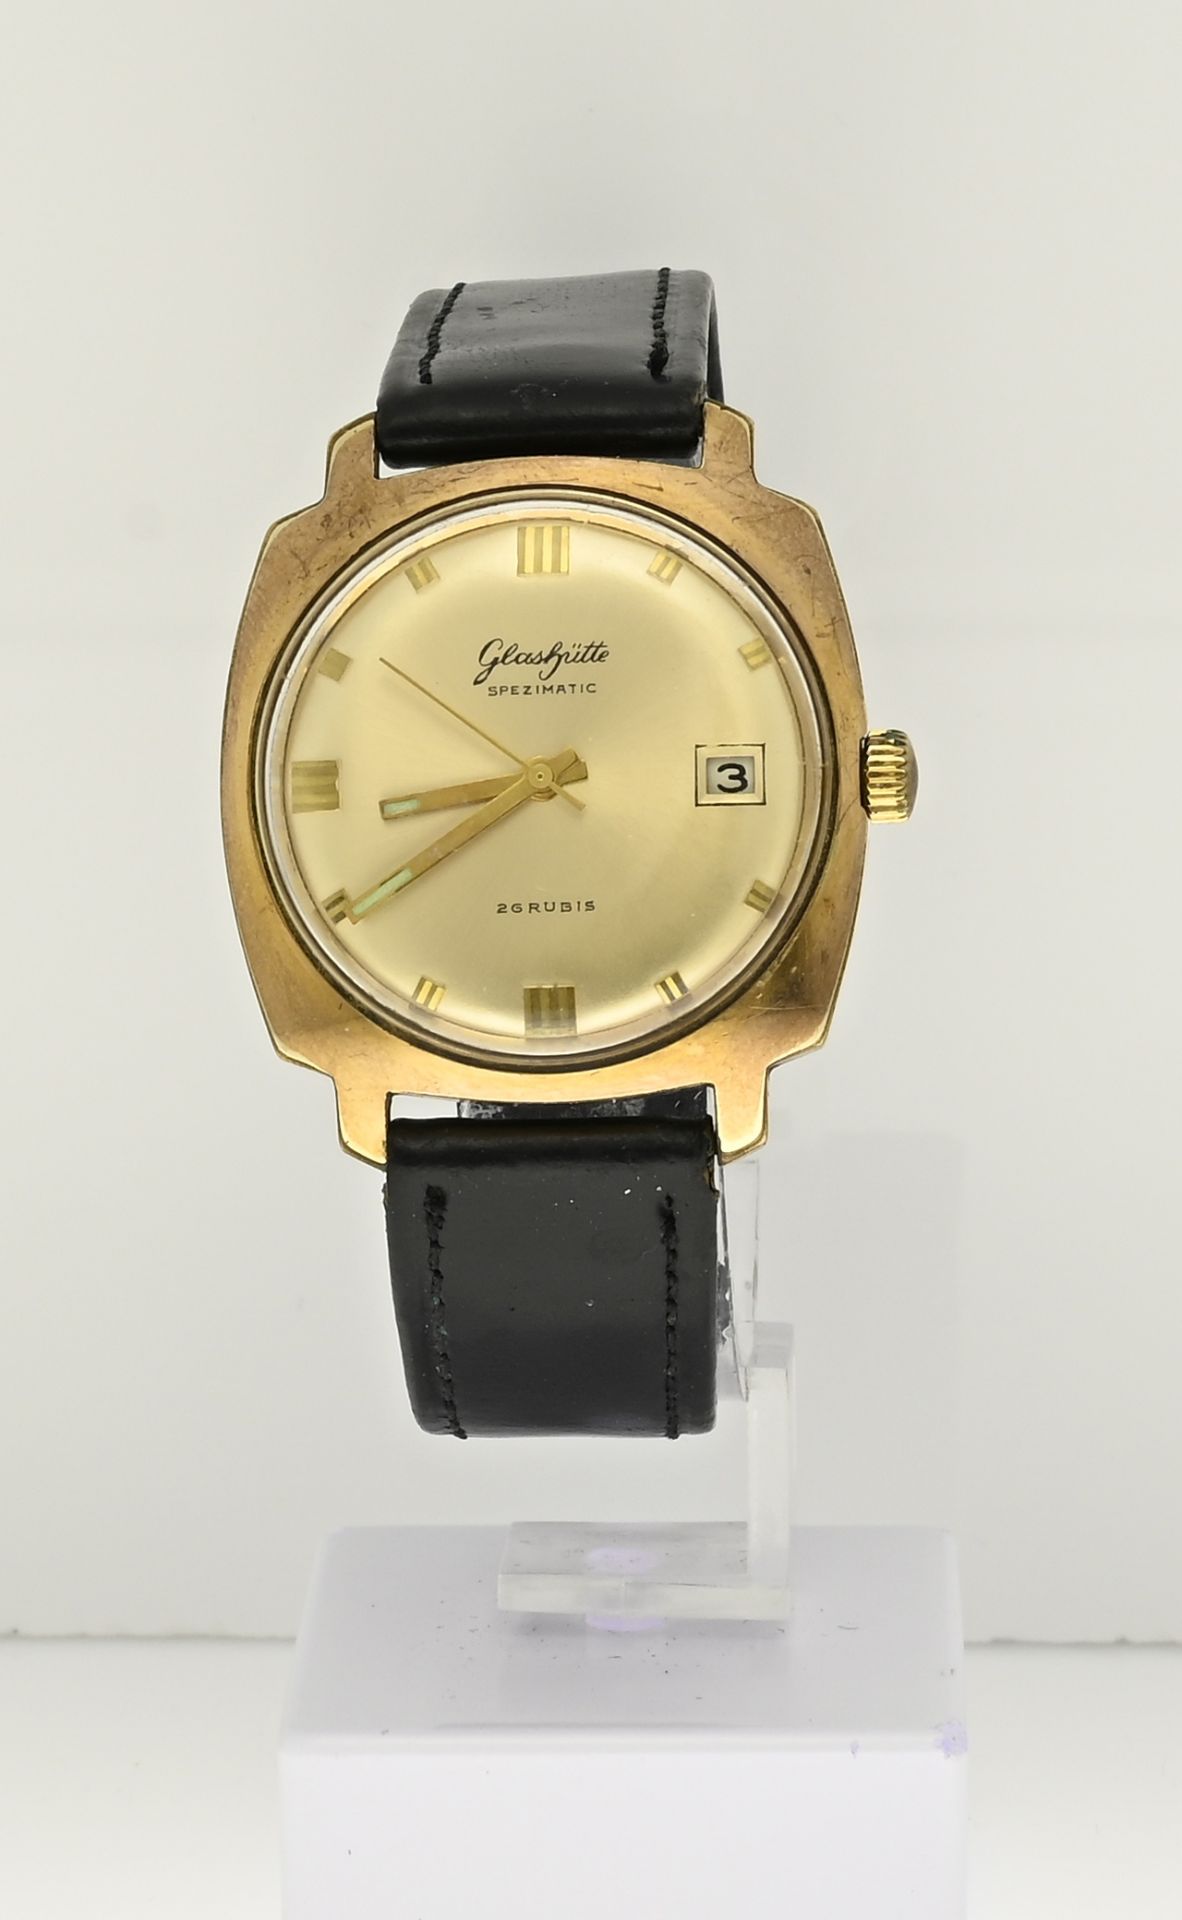 Glashutte Spezimatic watch